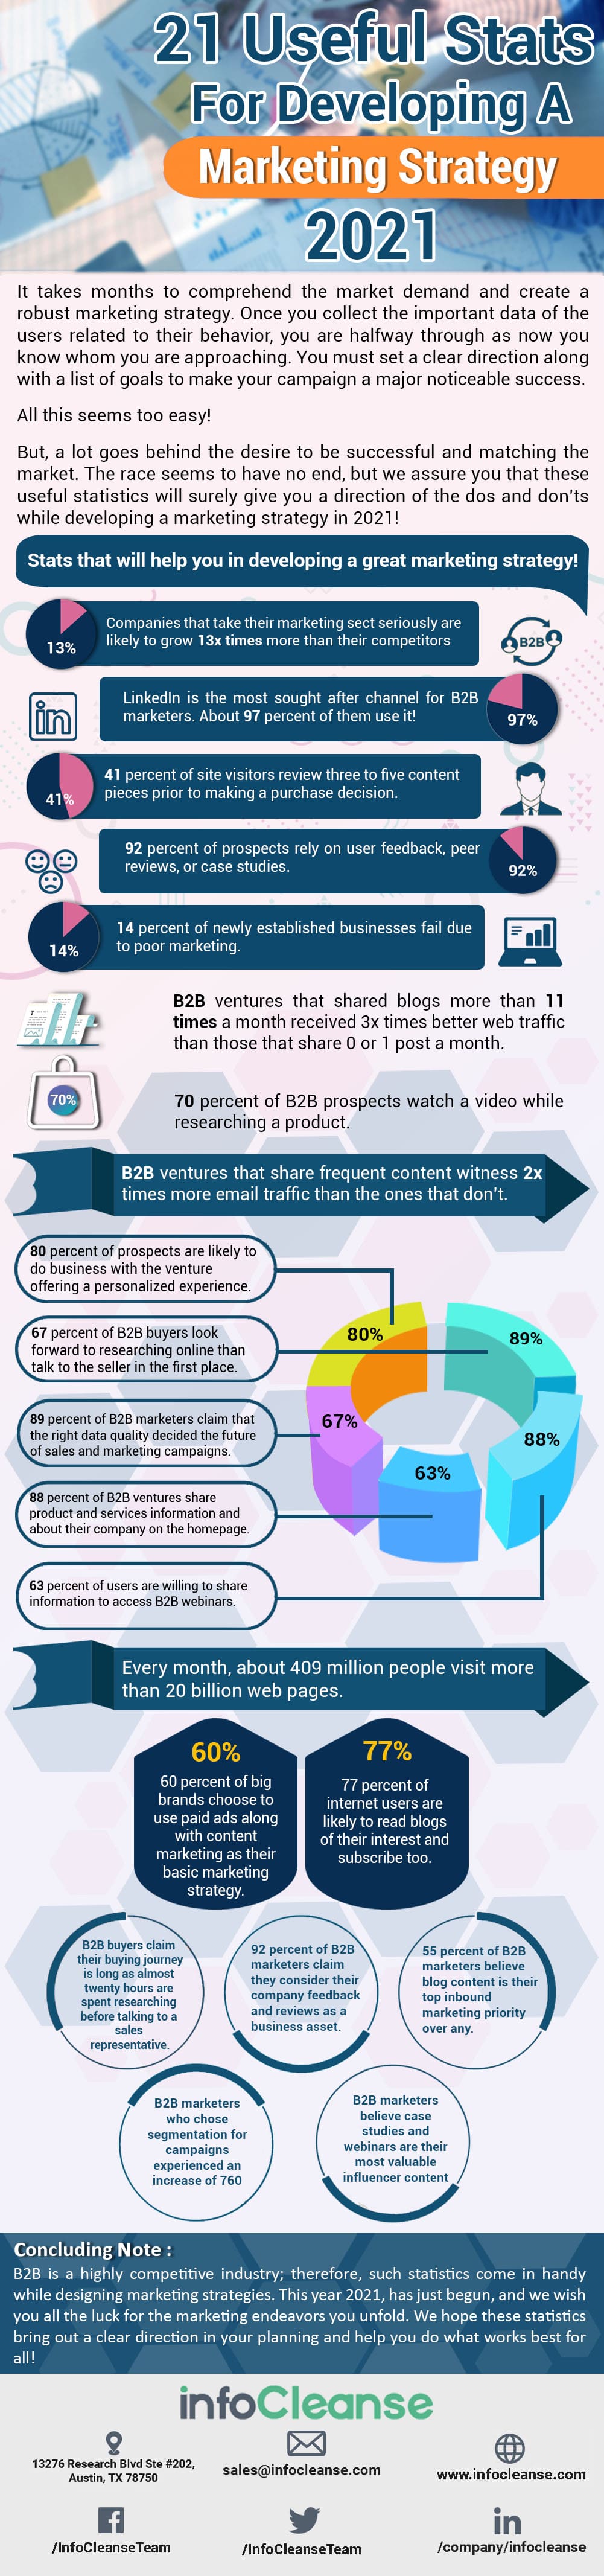 B2B Marketing Statistics Infographic